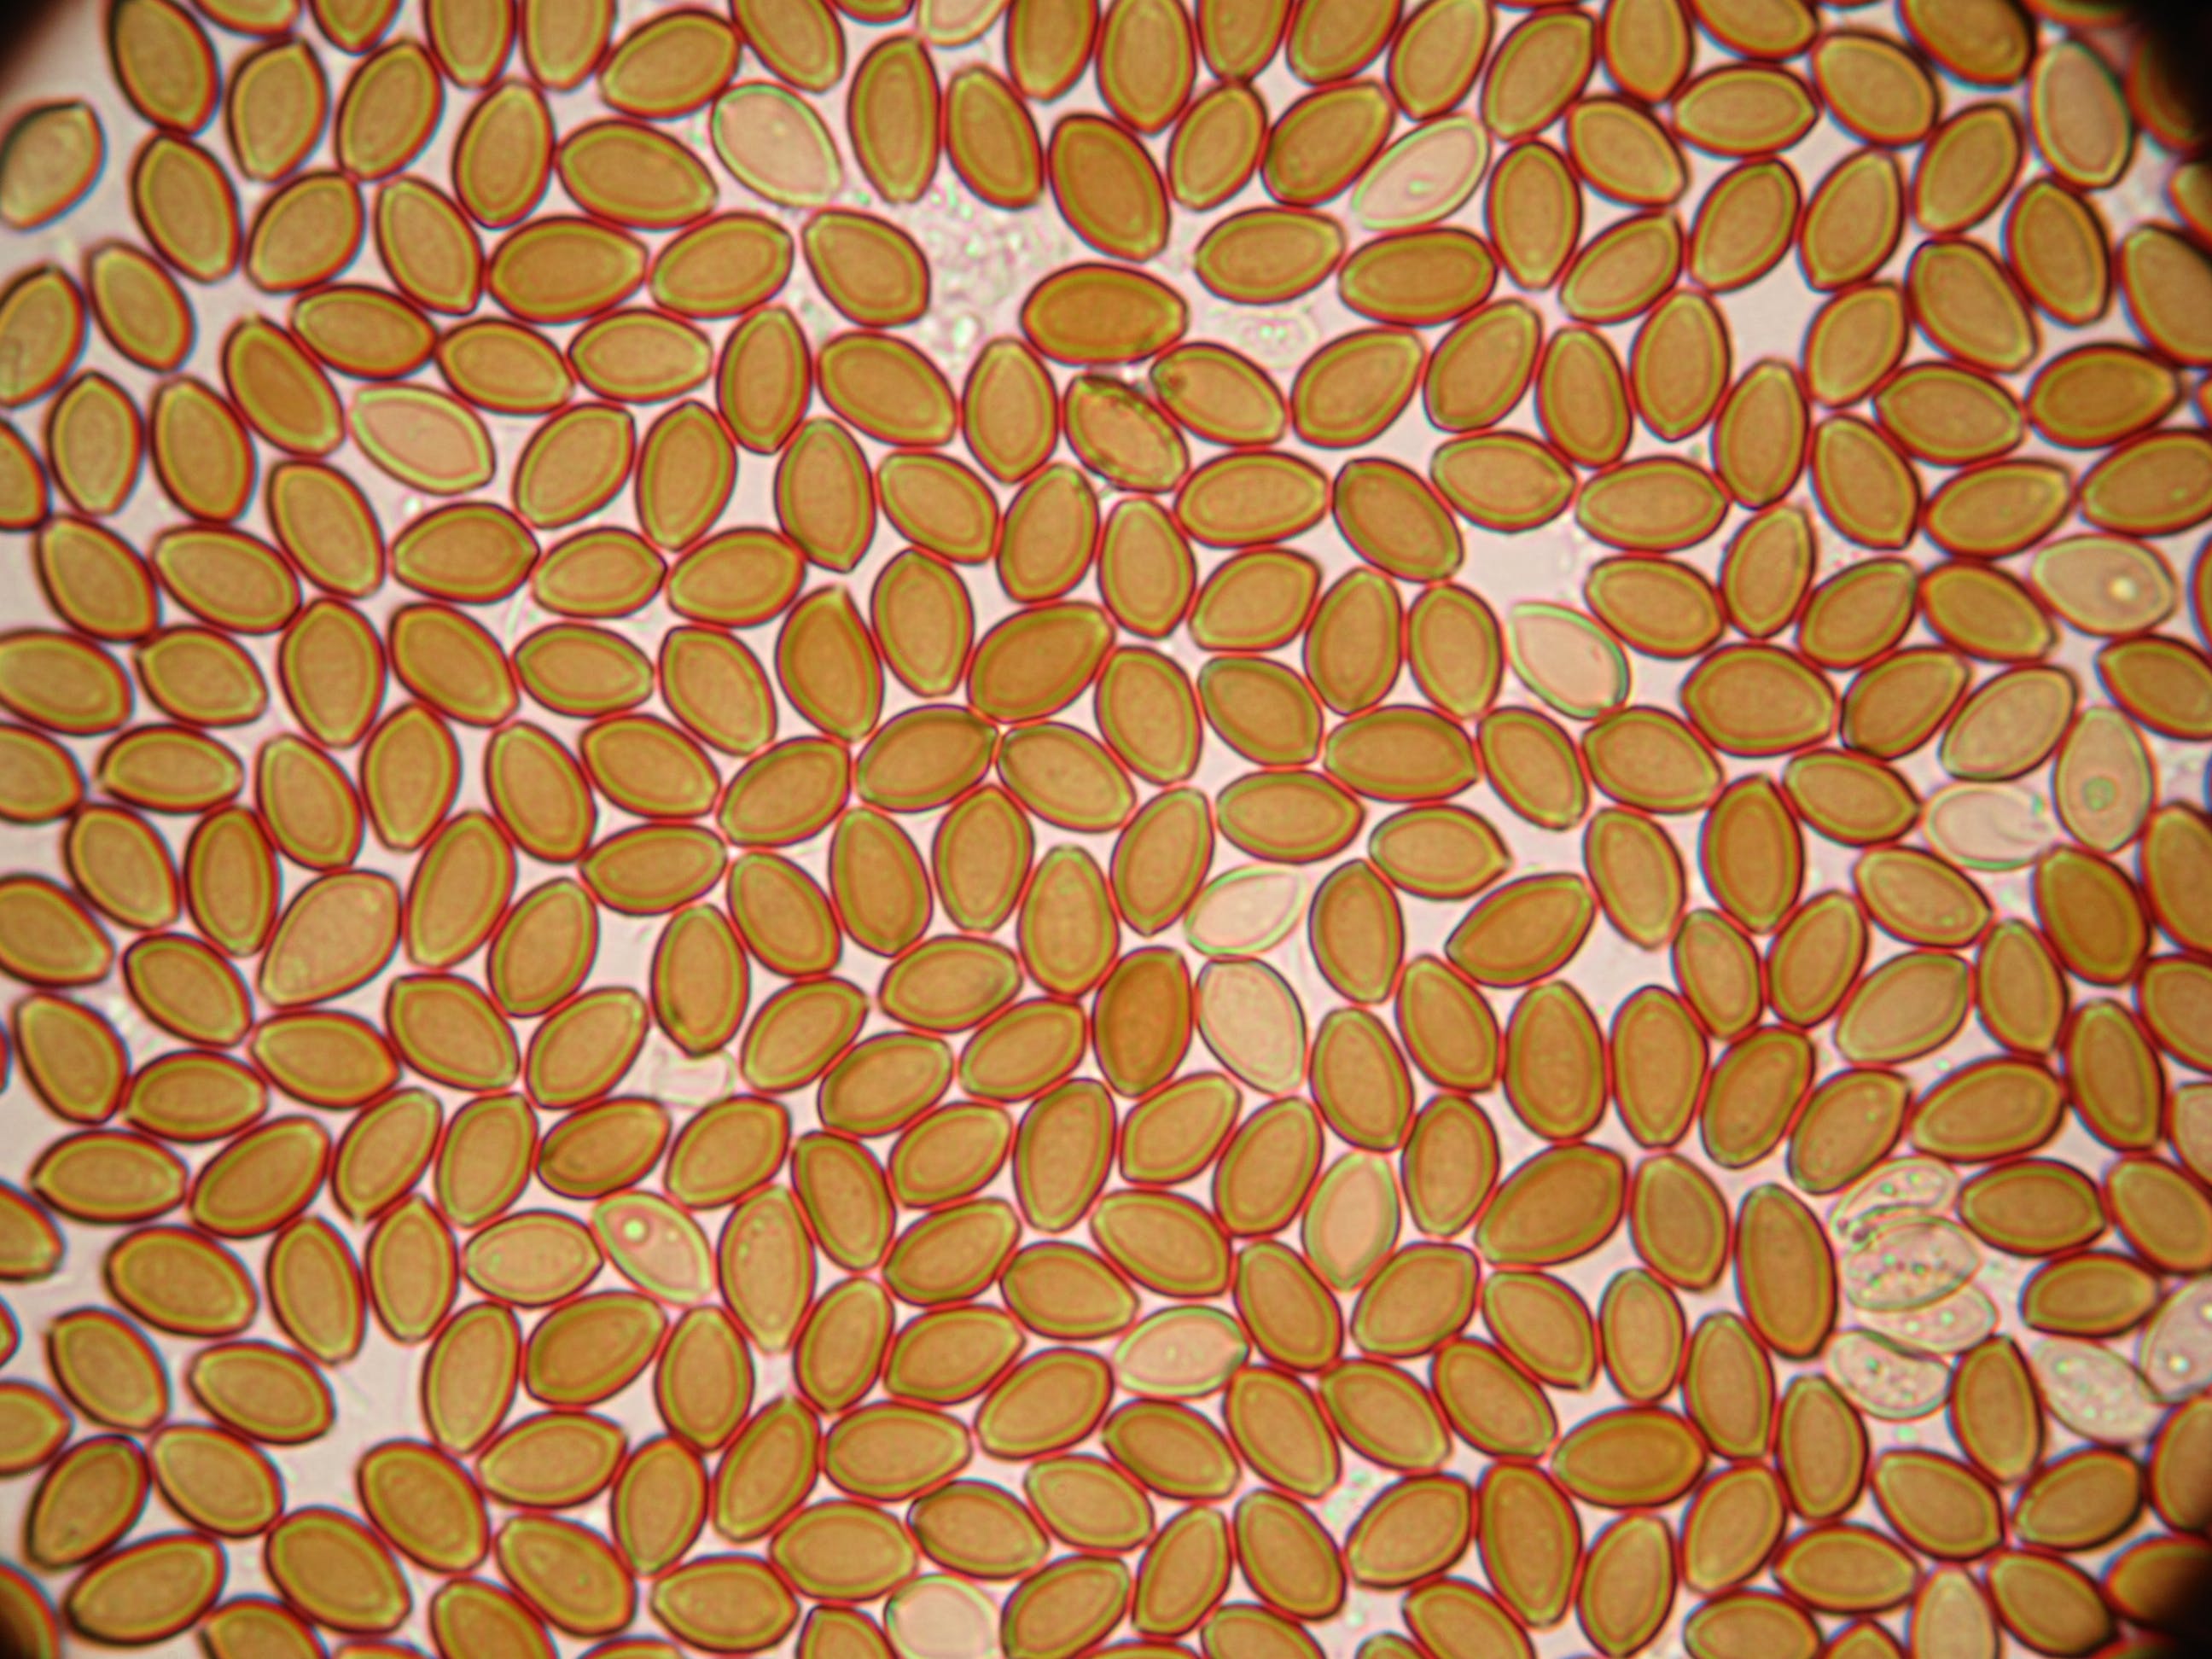 Spores from the Psilocybe stuntzii mushroom species seen under a microscope